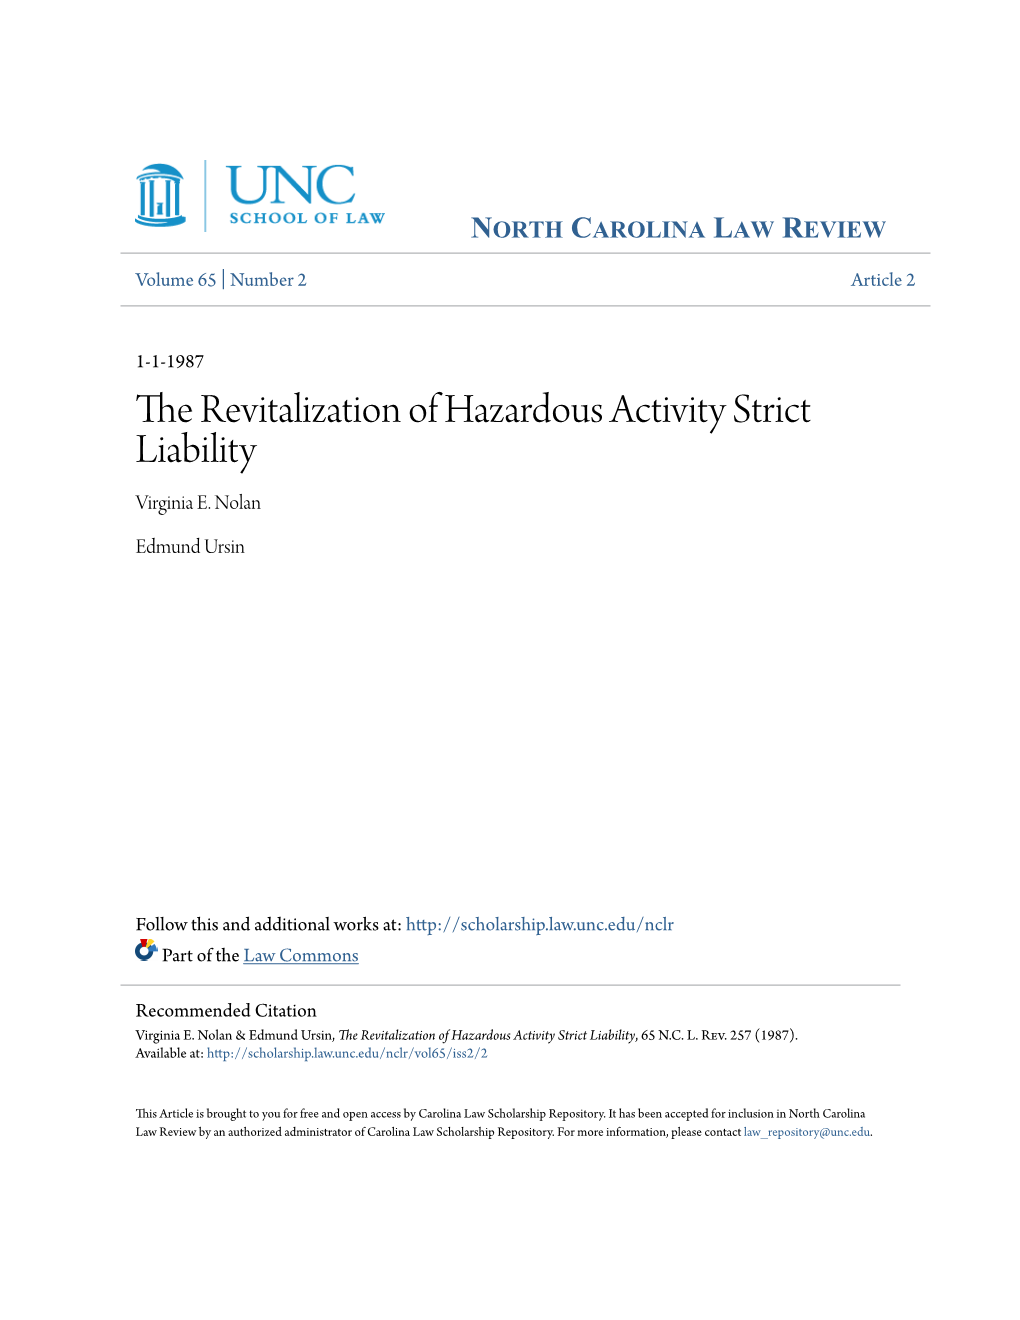 The Revitalization of Hazardous Activity Strict Liability Virginia E